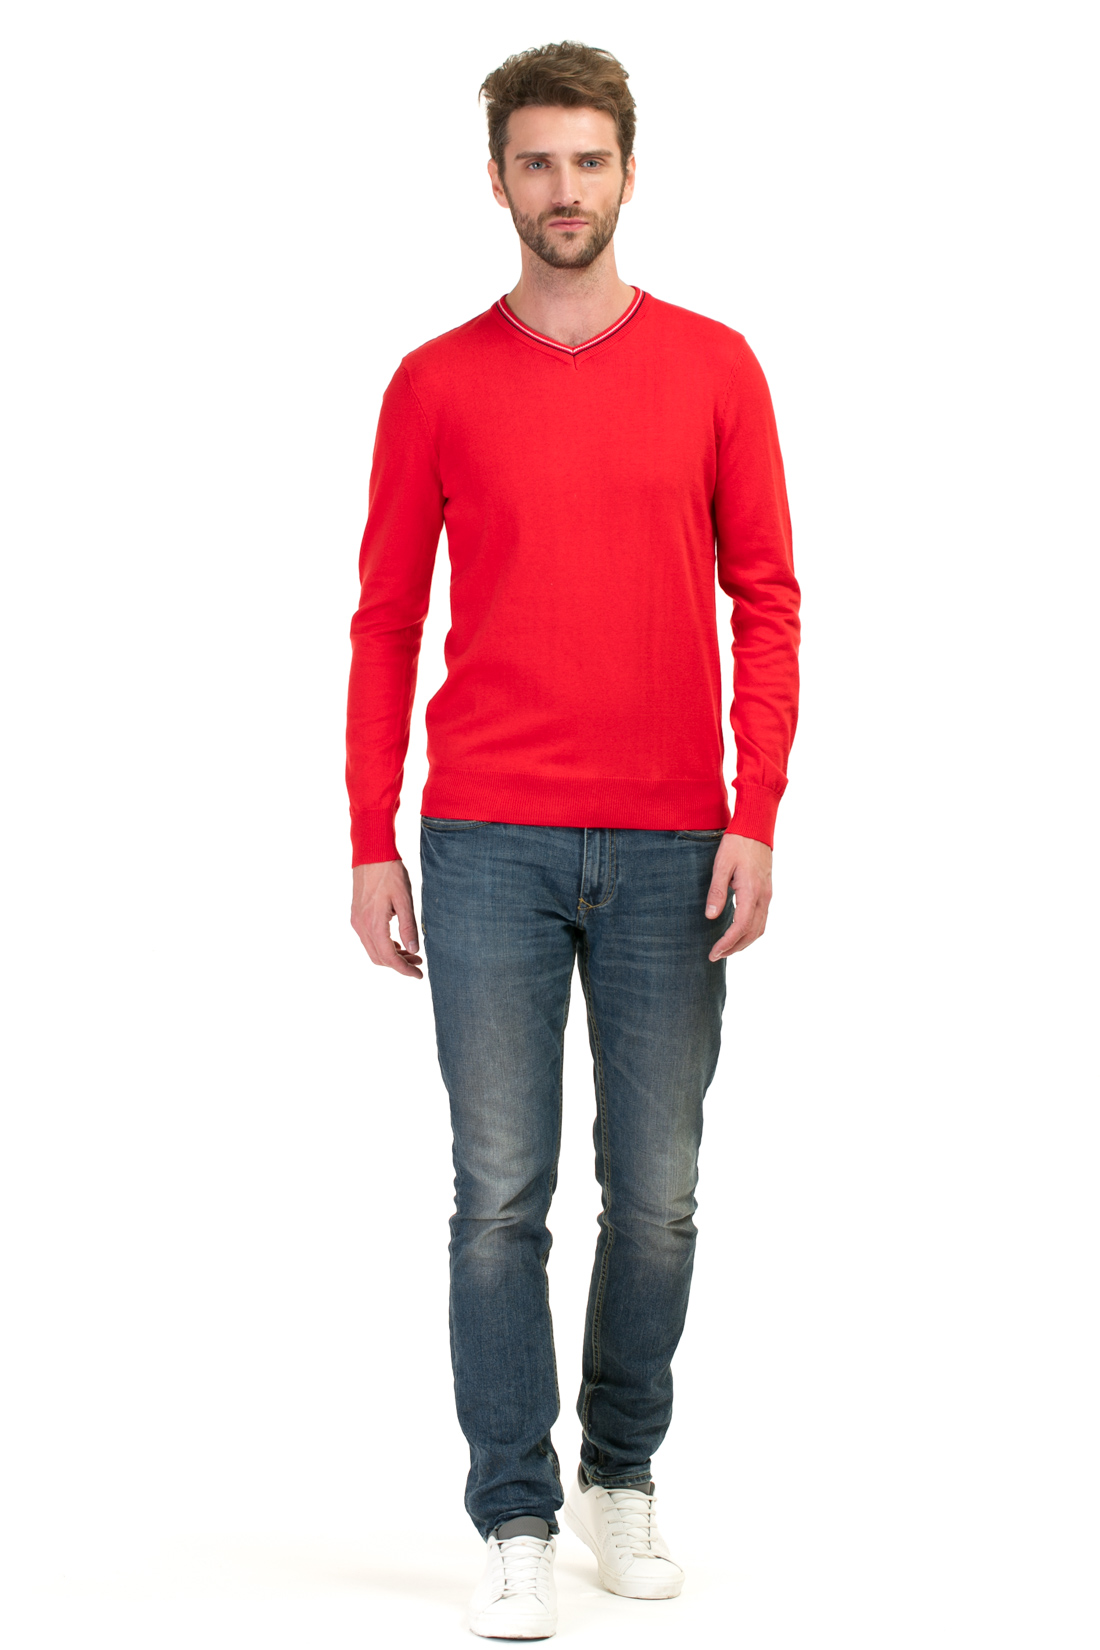 Пуловер с окантовкой на вырезе (арт. baon B637004), размер M, цвет красный Пуловер с окантовкой на вырезе (арт. baon B637004) - фото 3